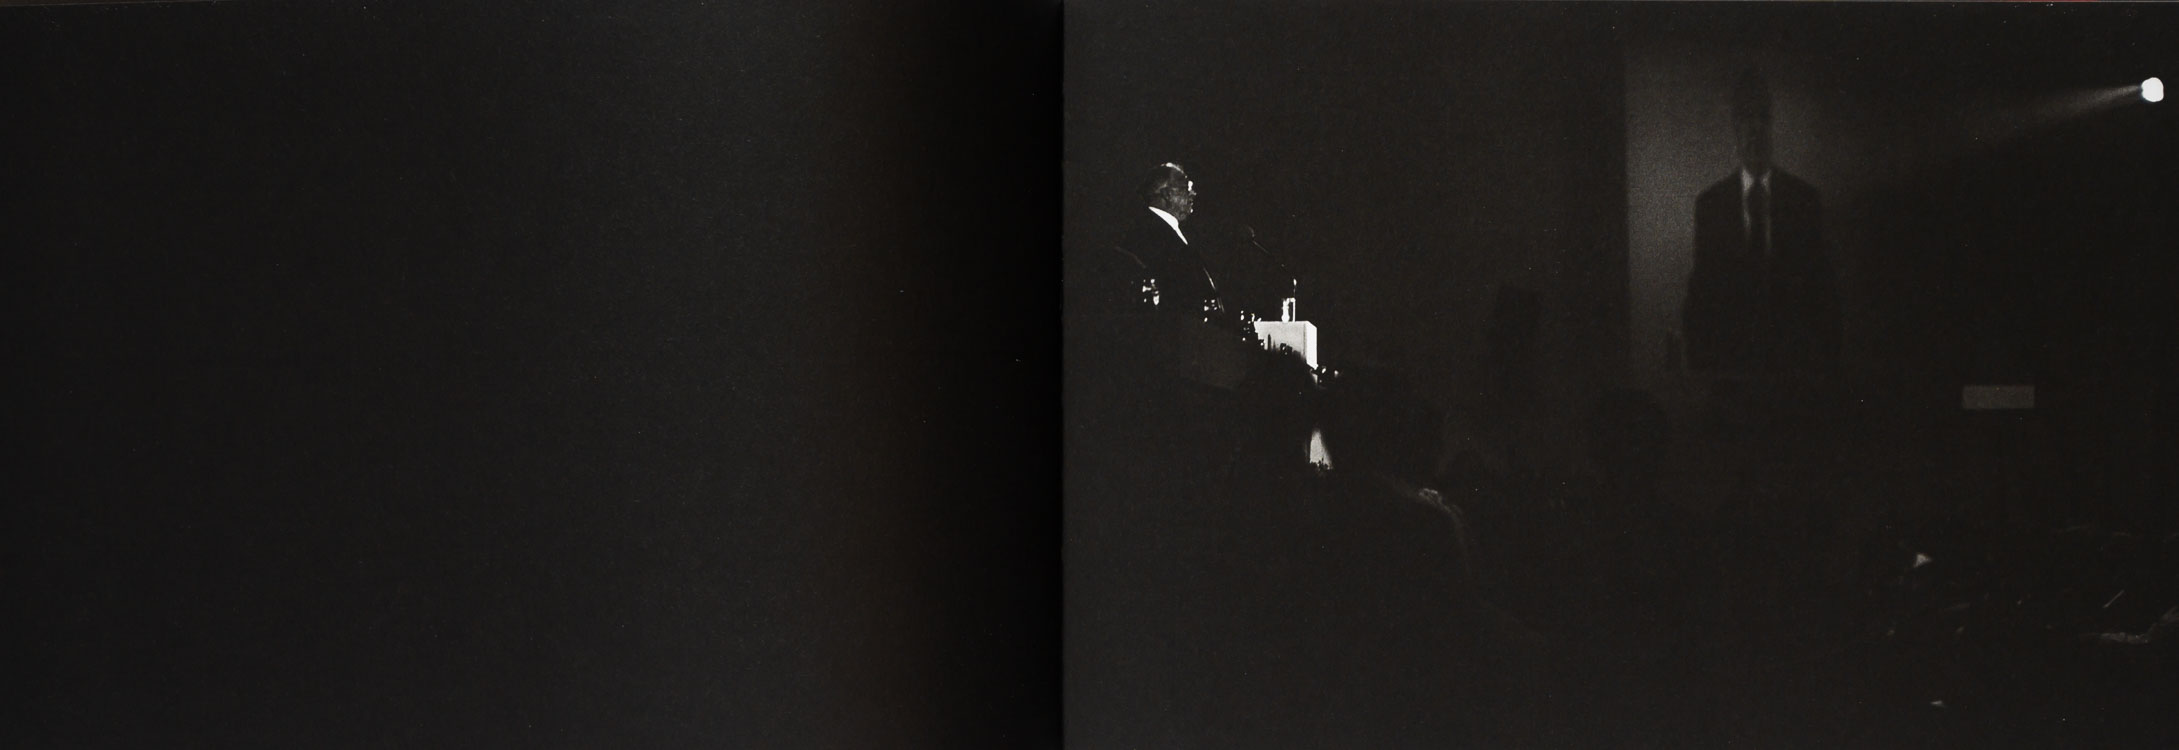 Inszenierung Helmut Kohl 1990, Fotobuch WAHL KAMPF RITUAL – Fotografie